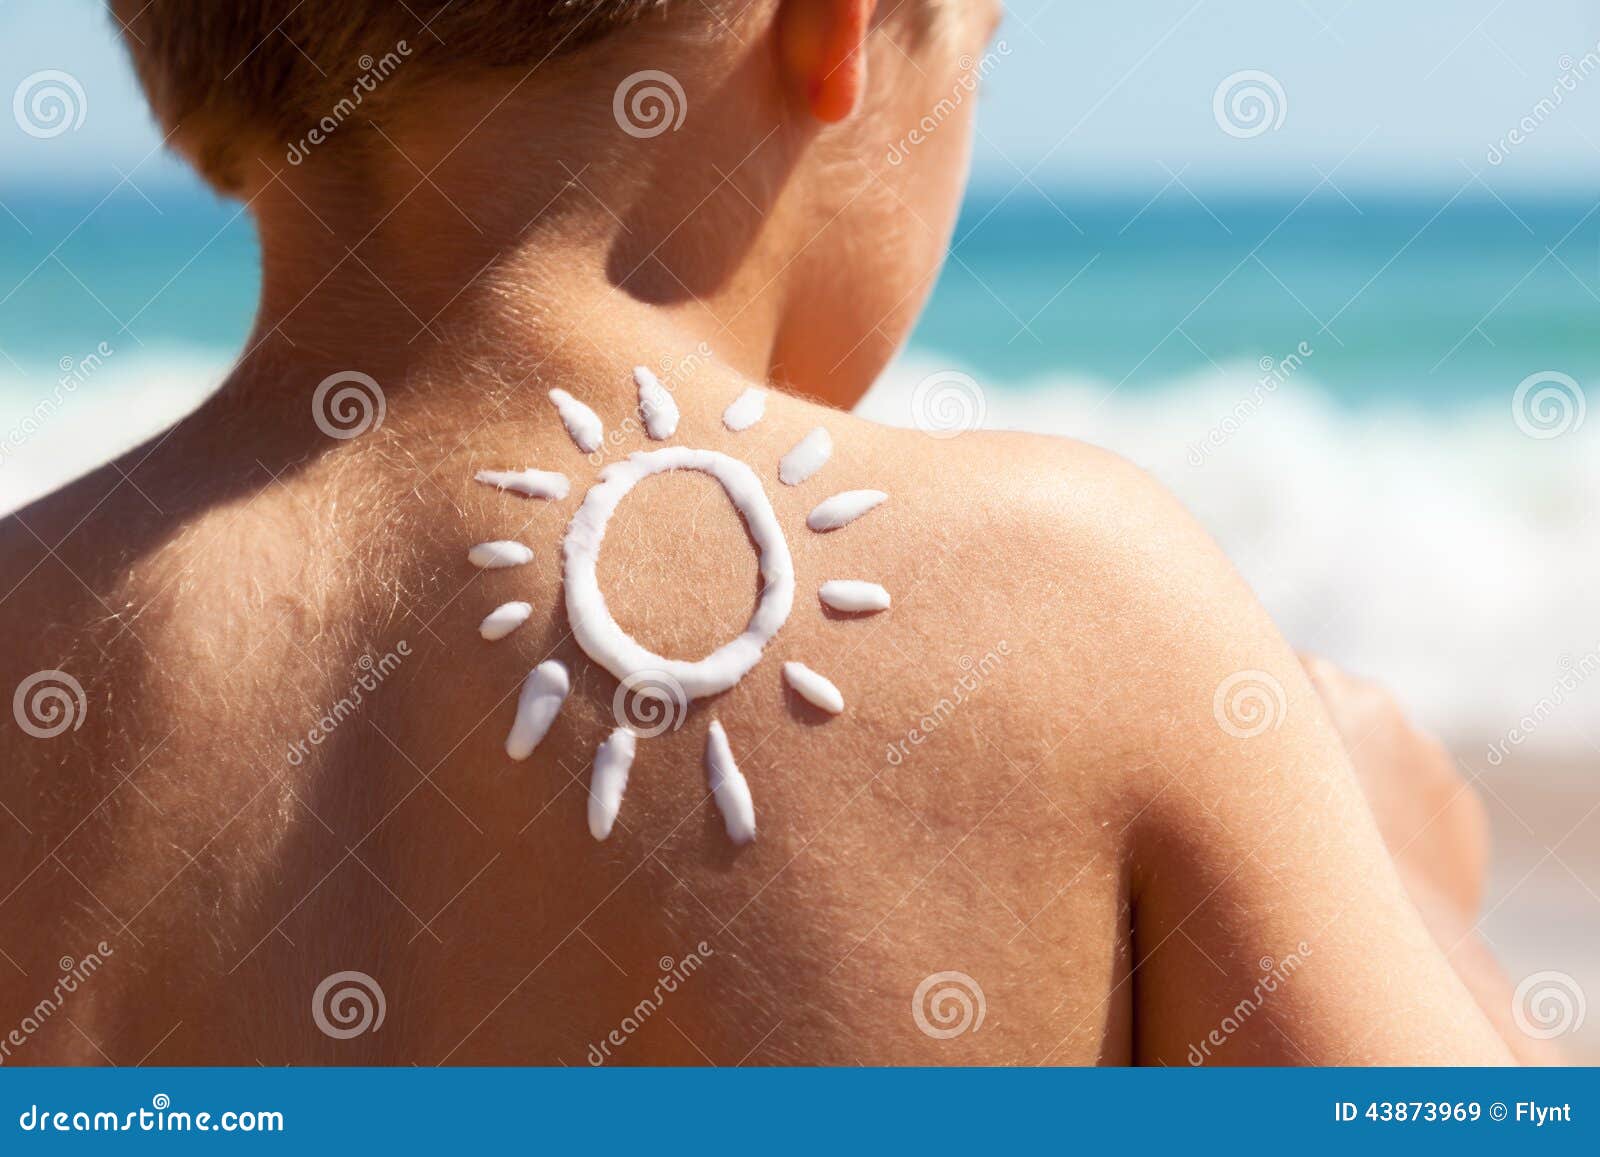 suntan lotion at the beach